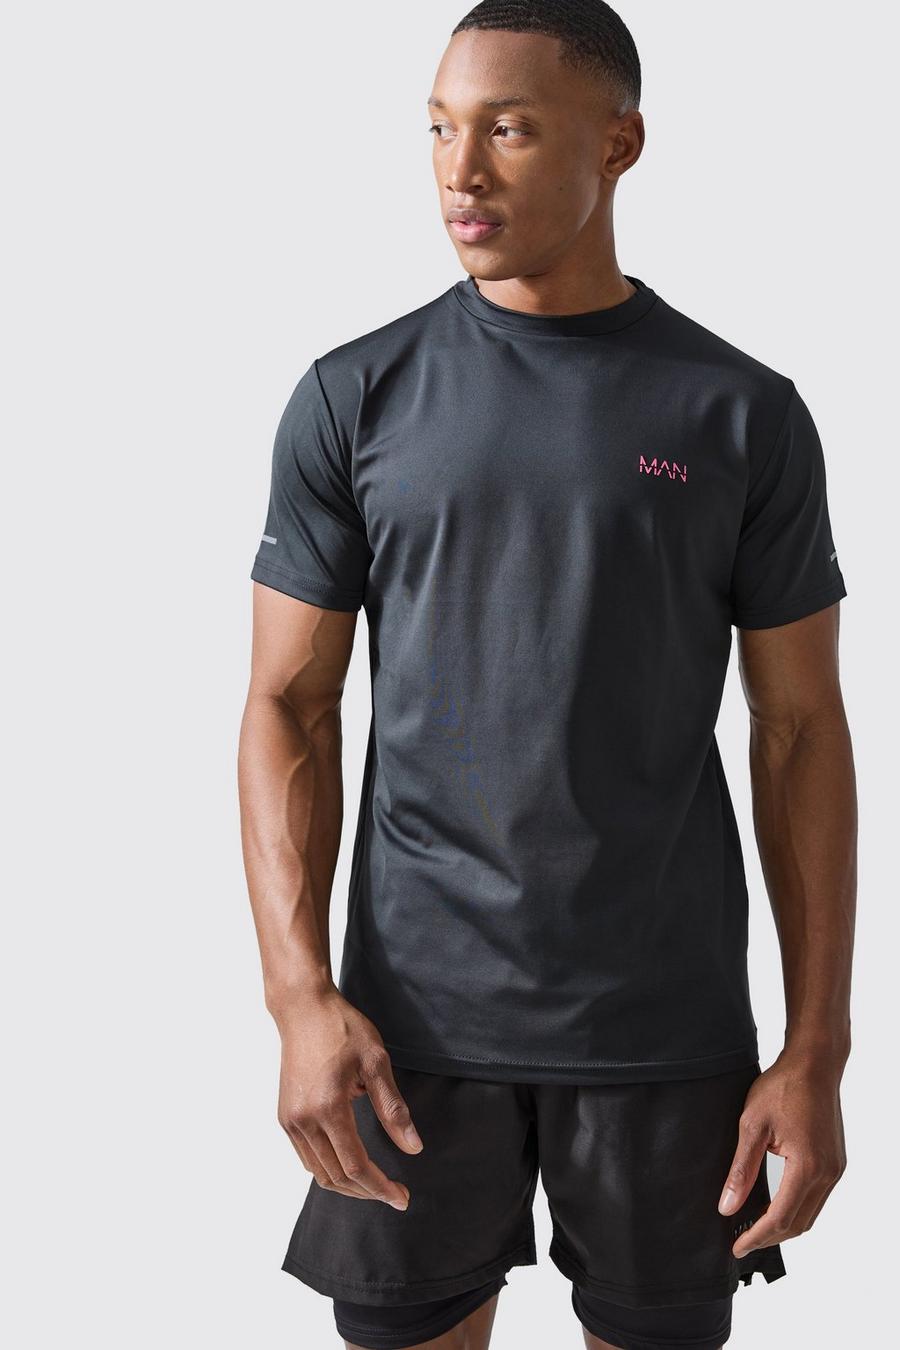 Man Active Performance T-Shirt, Black